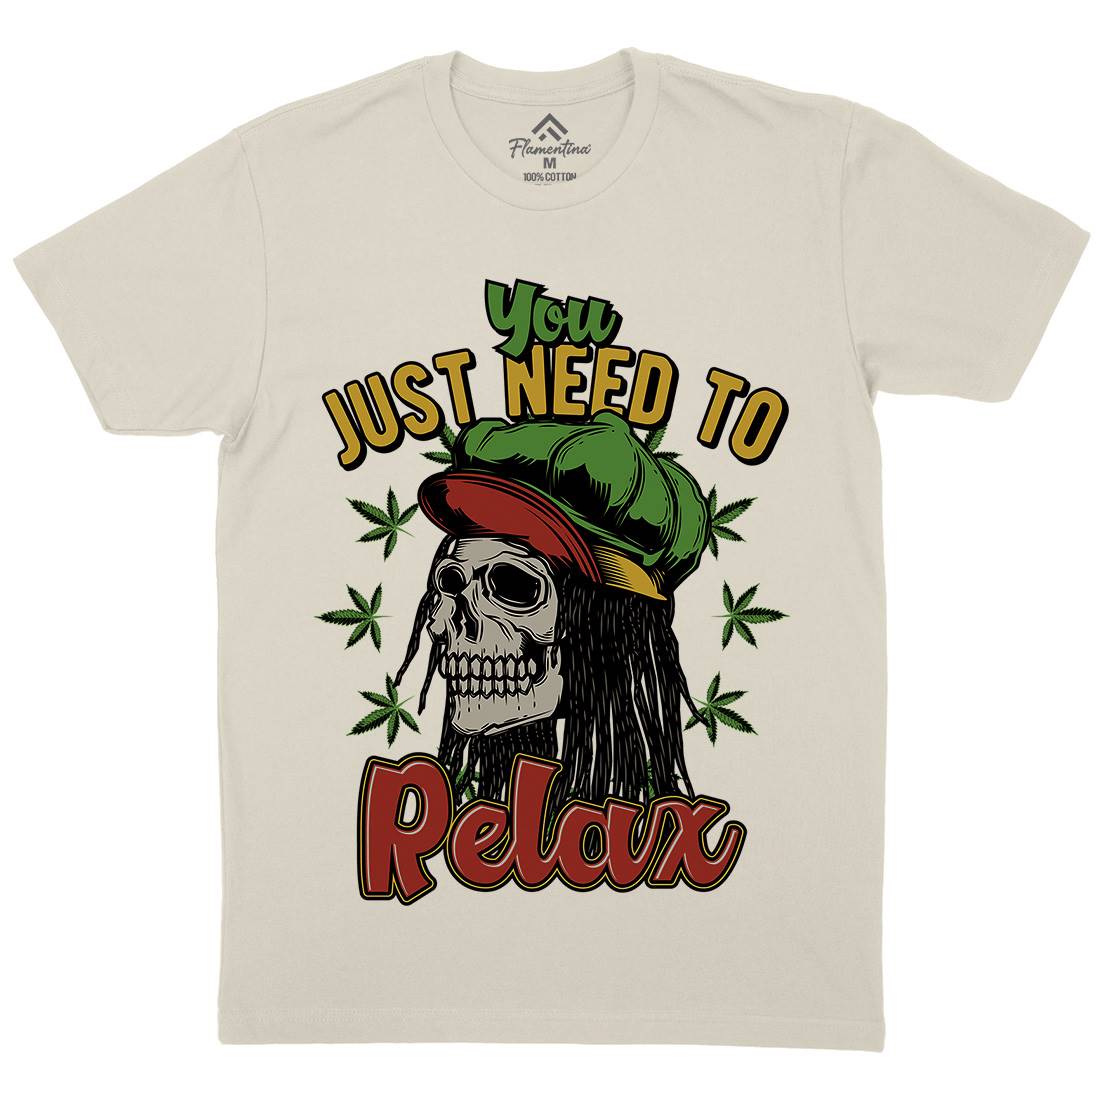 Need To Relax Mens Organic Crew Neck T-Shirt Drugs B804